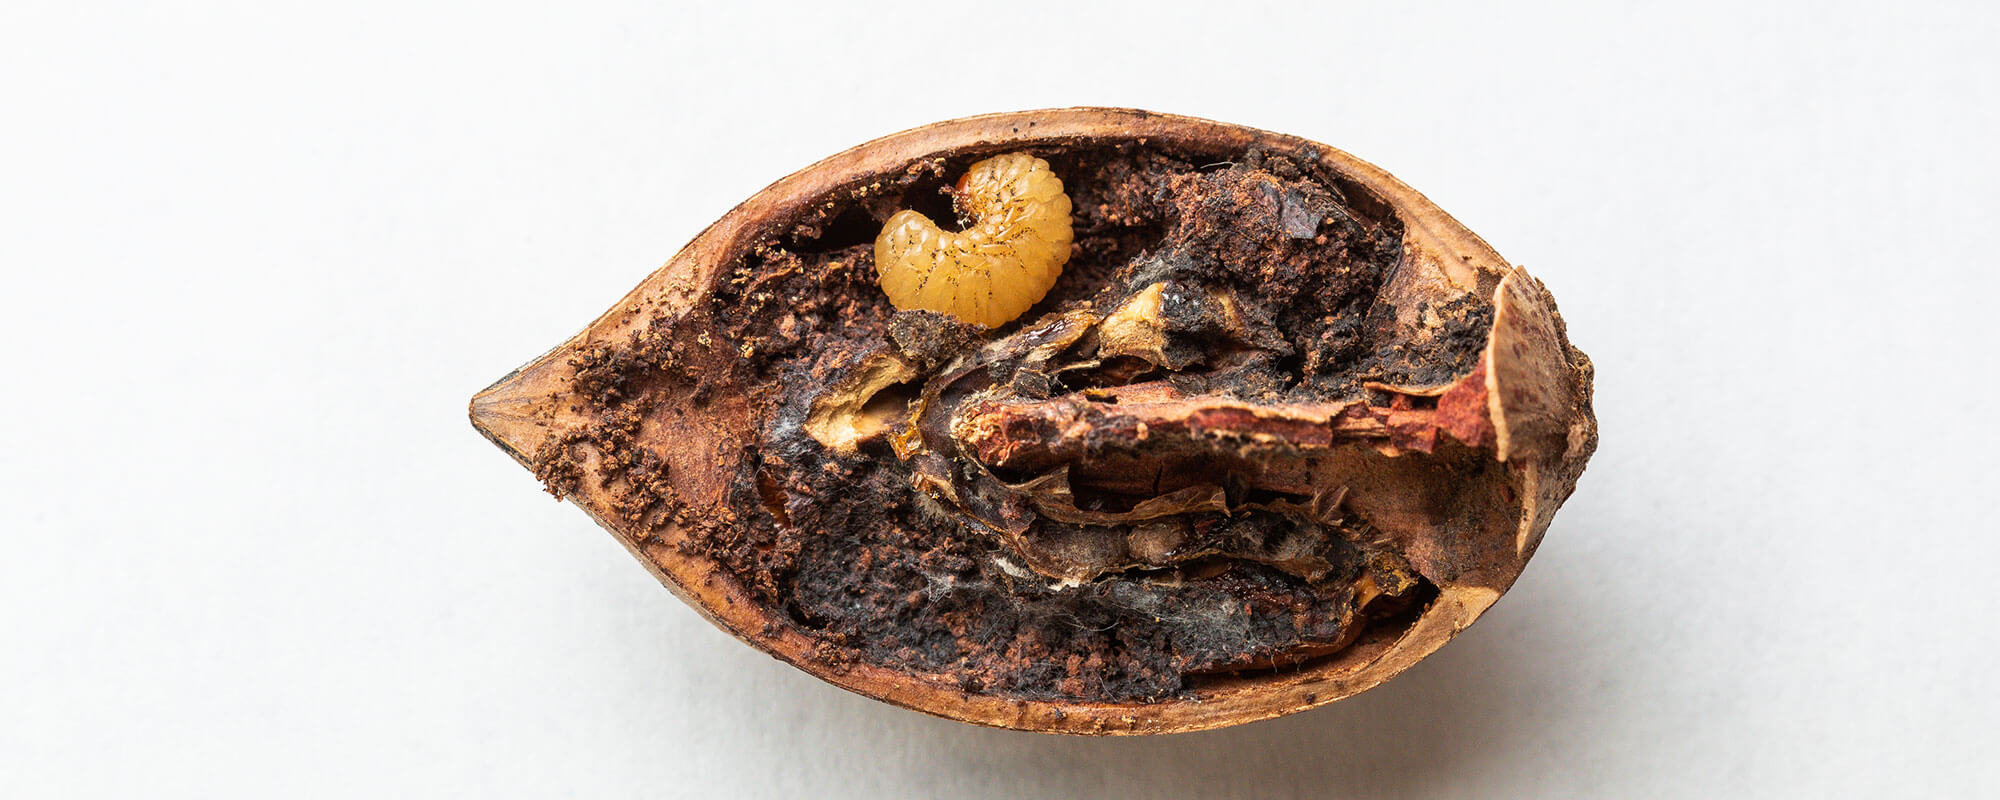 Pecan weevil grub in a nut